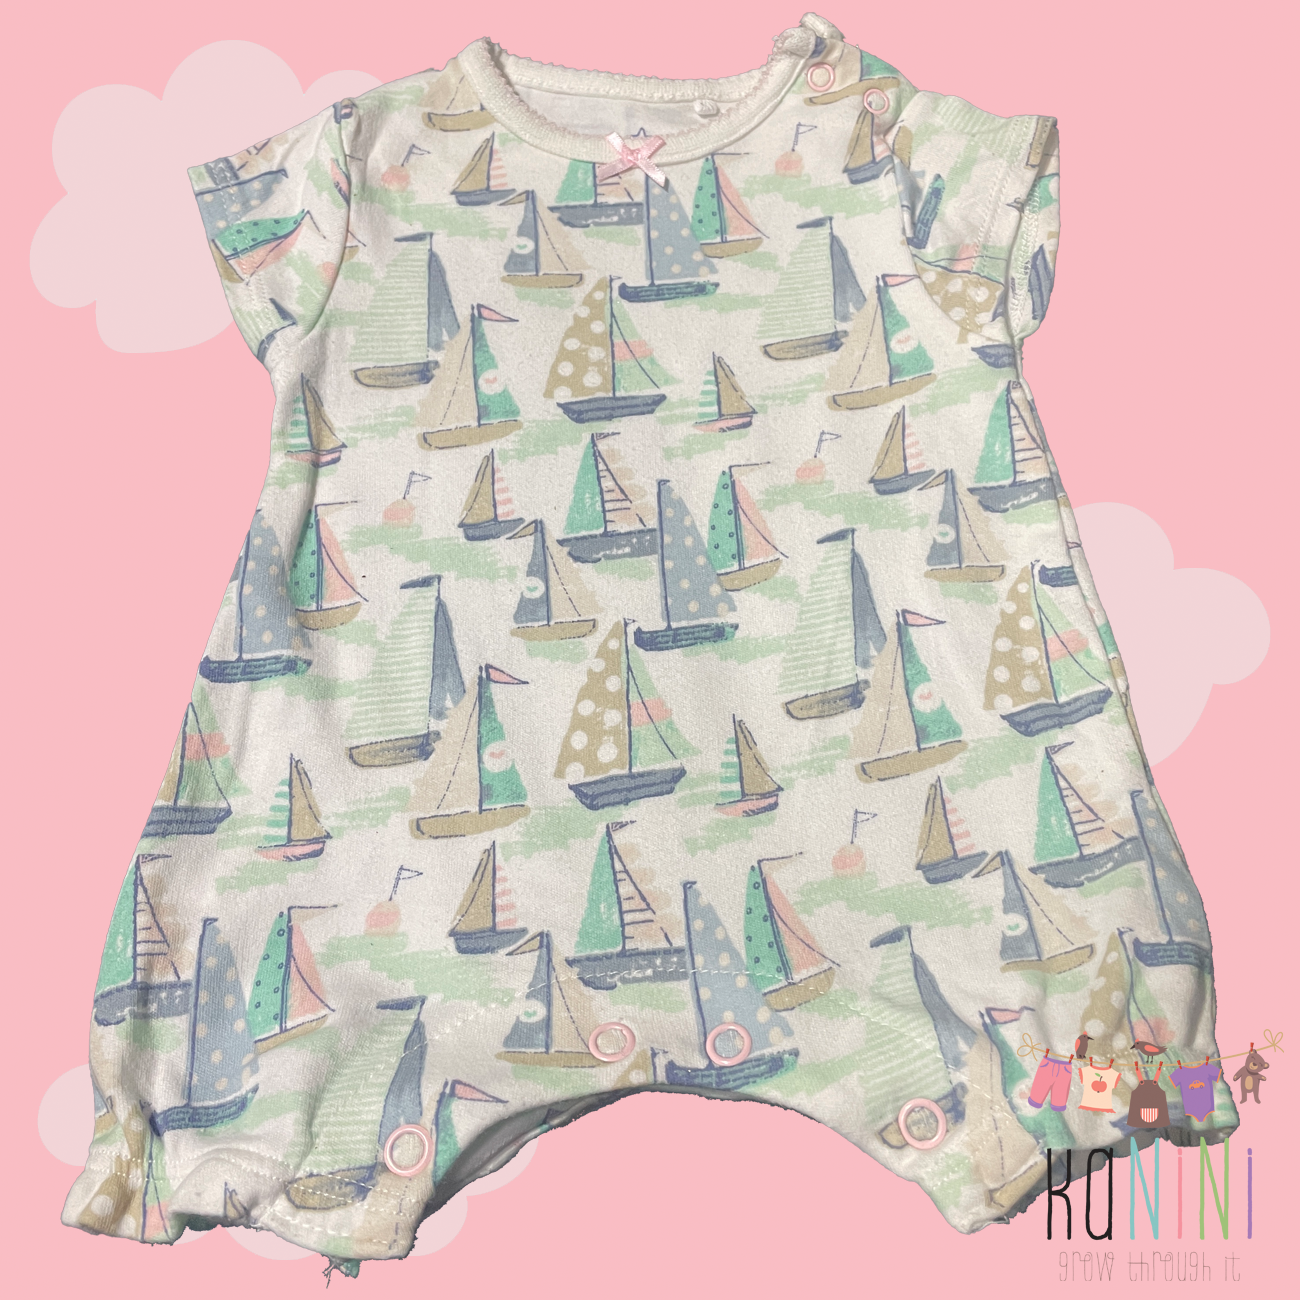 Featured image for “UK Next Newborn Girls Boat Print Romper”